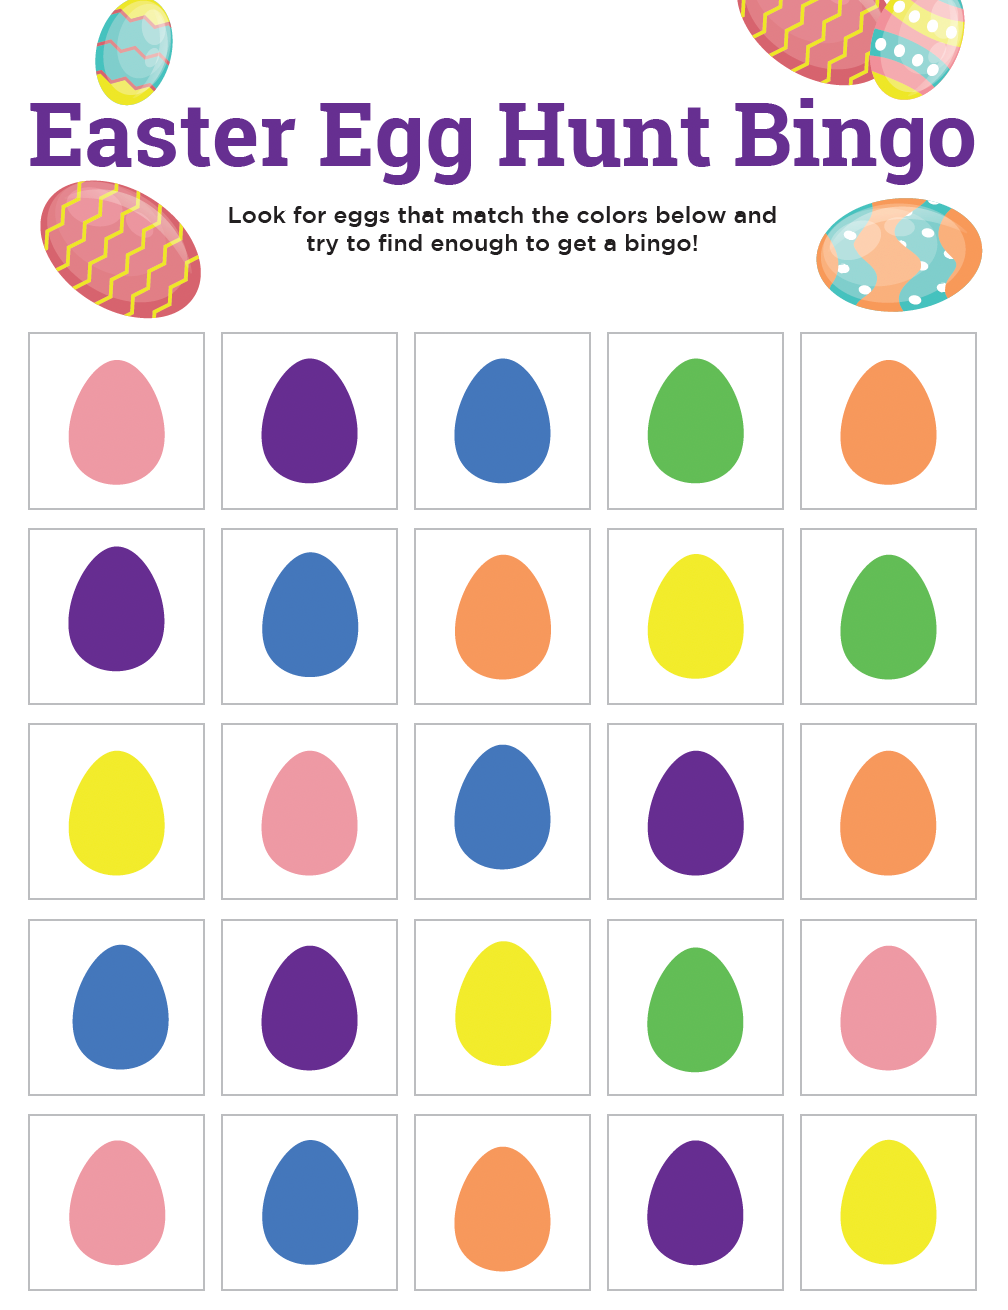 Easter Egg Hunt Bingo